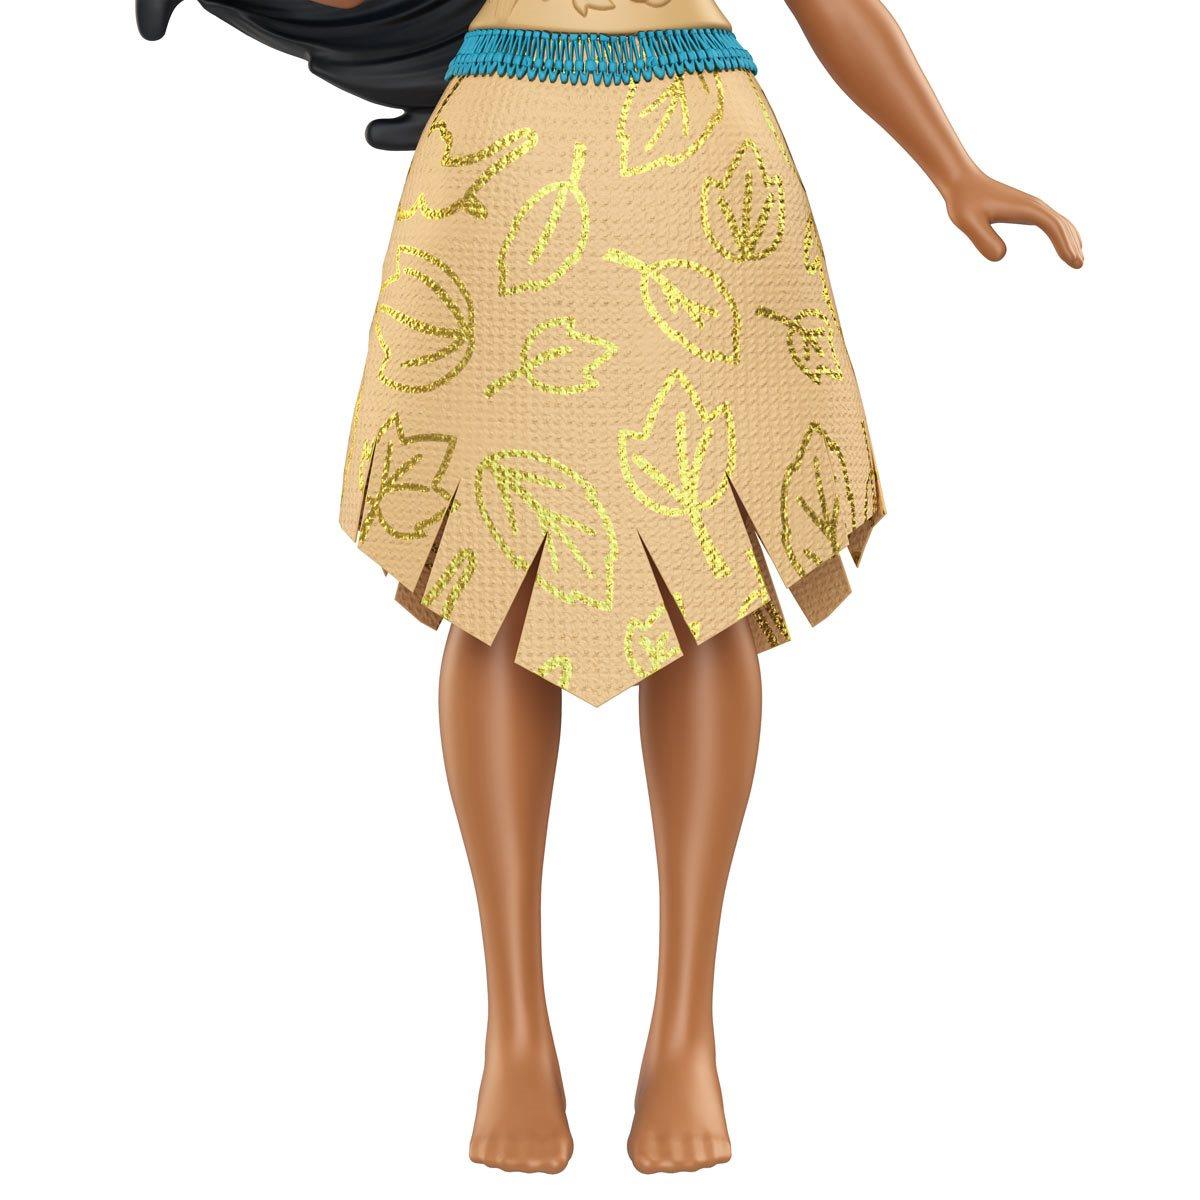 Disney Princess Pocahontas Small Doll - BumbleToys - 5-7 Years, Boys, Disney Princess, dup-review-publication, Fashion Dolls & Accessories, Girls, Mattel